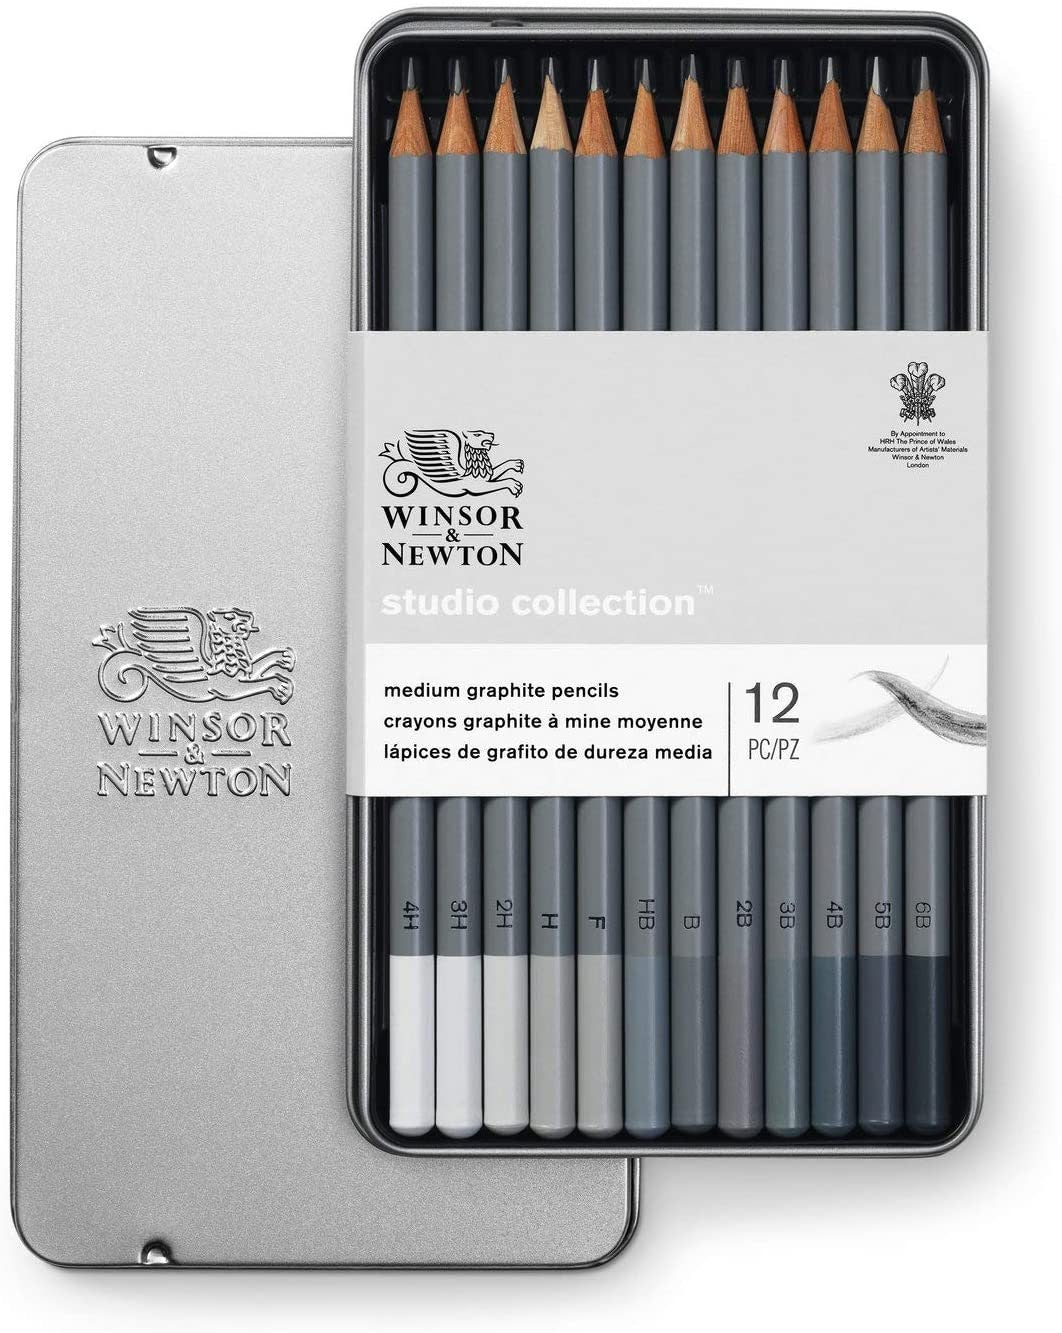 Winsor & Newton Studio Collection Graphite Pencils Medium Set of 12